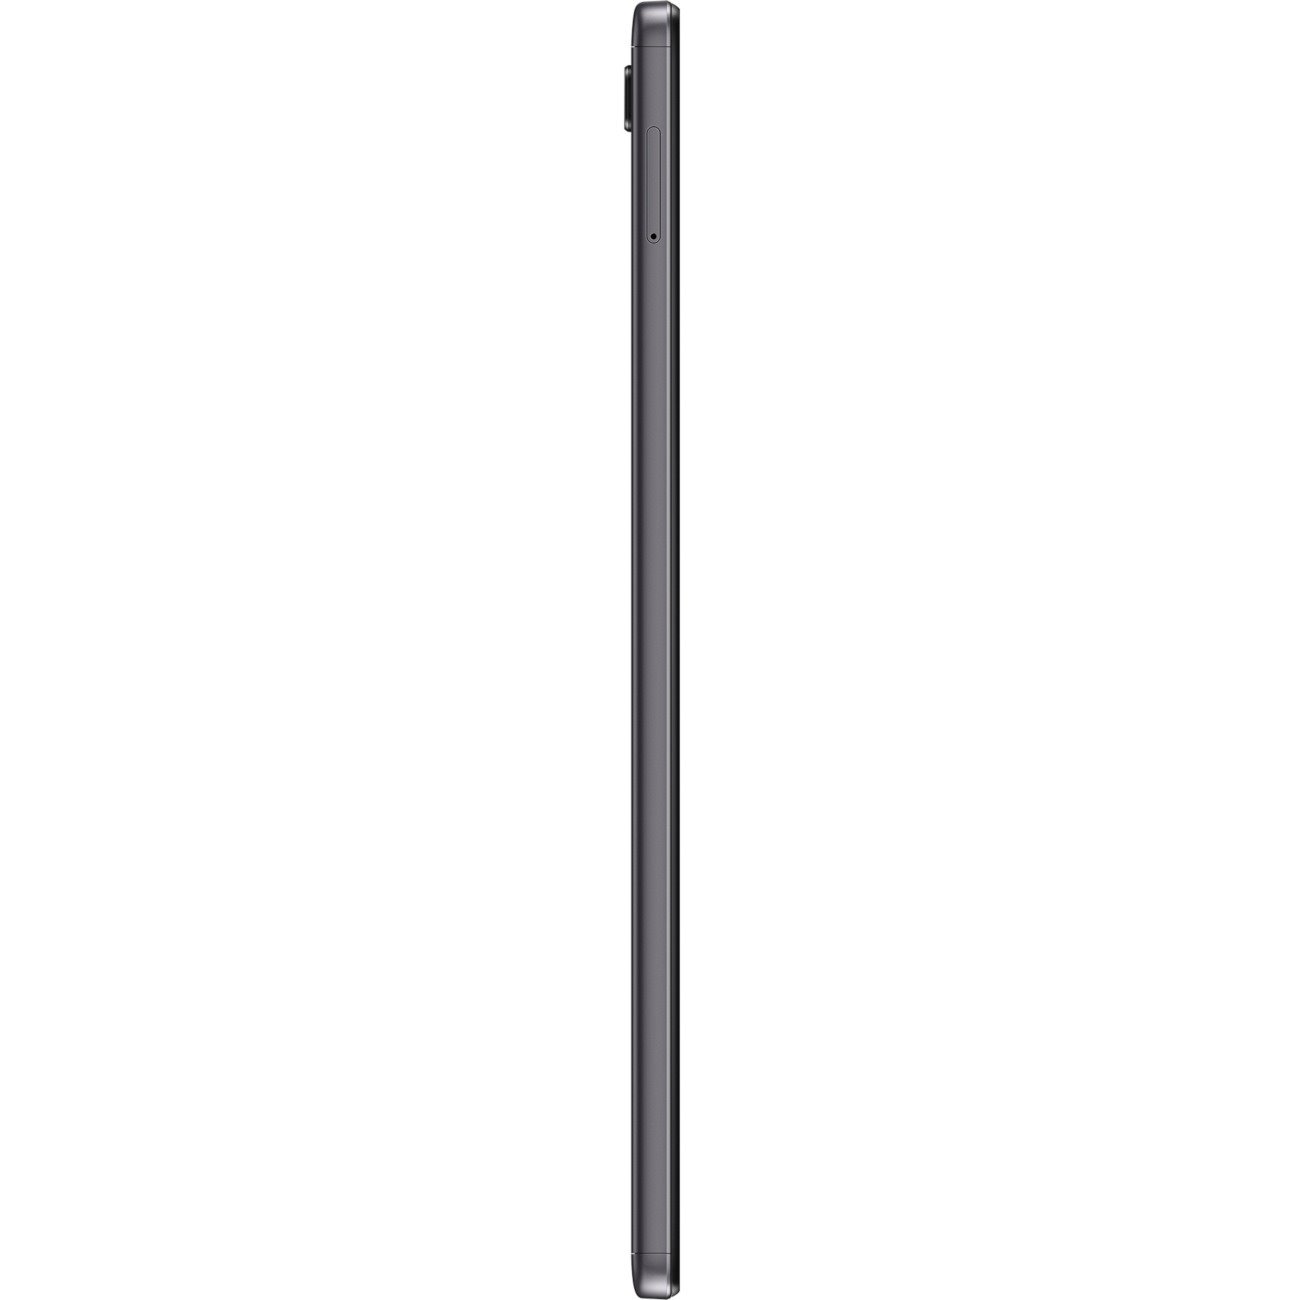 Samsung Galaxy Tab A7 Lite SM-T225 Tablet - 22.1 cm (8.7") WXGA+ - MediaTek MT8768T - 3 GB - 32 GB Storage - Android 11 - 4G - Dark Grey